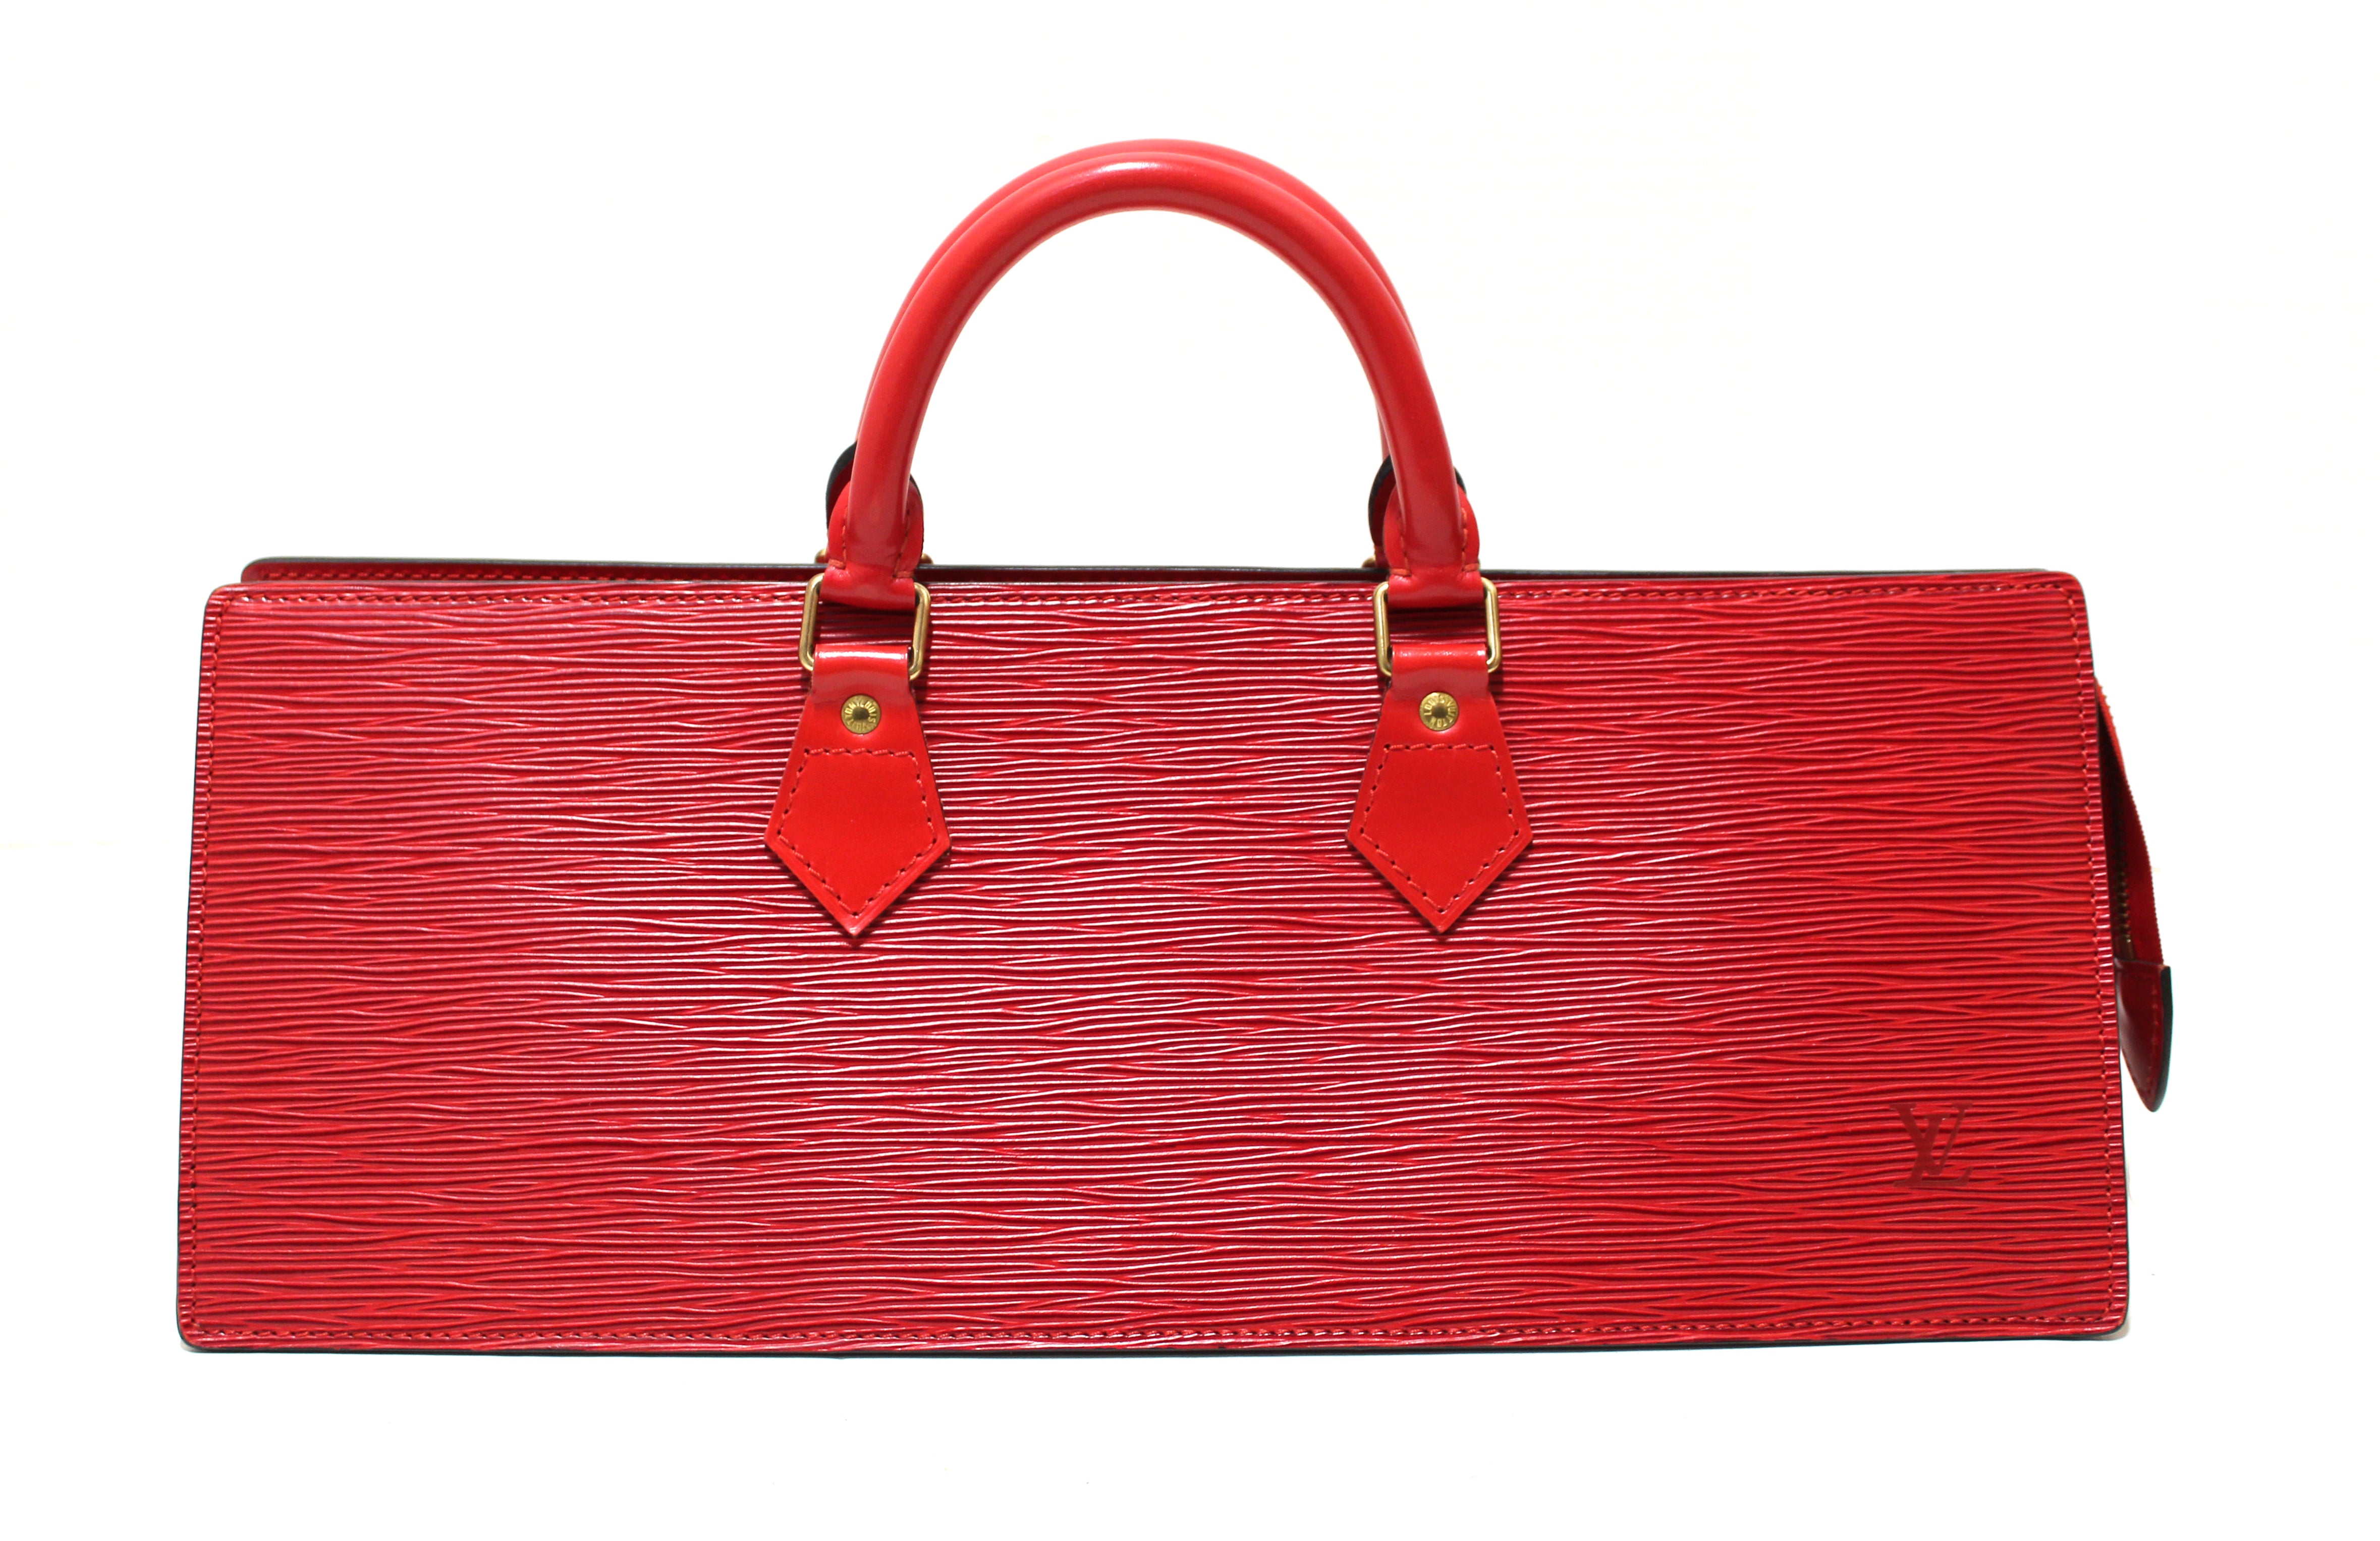 USED LOUIS VUITTON Sac Triangle Used Handbag Epi Leather Red M52097 Vintage